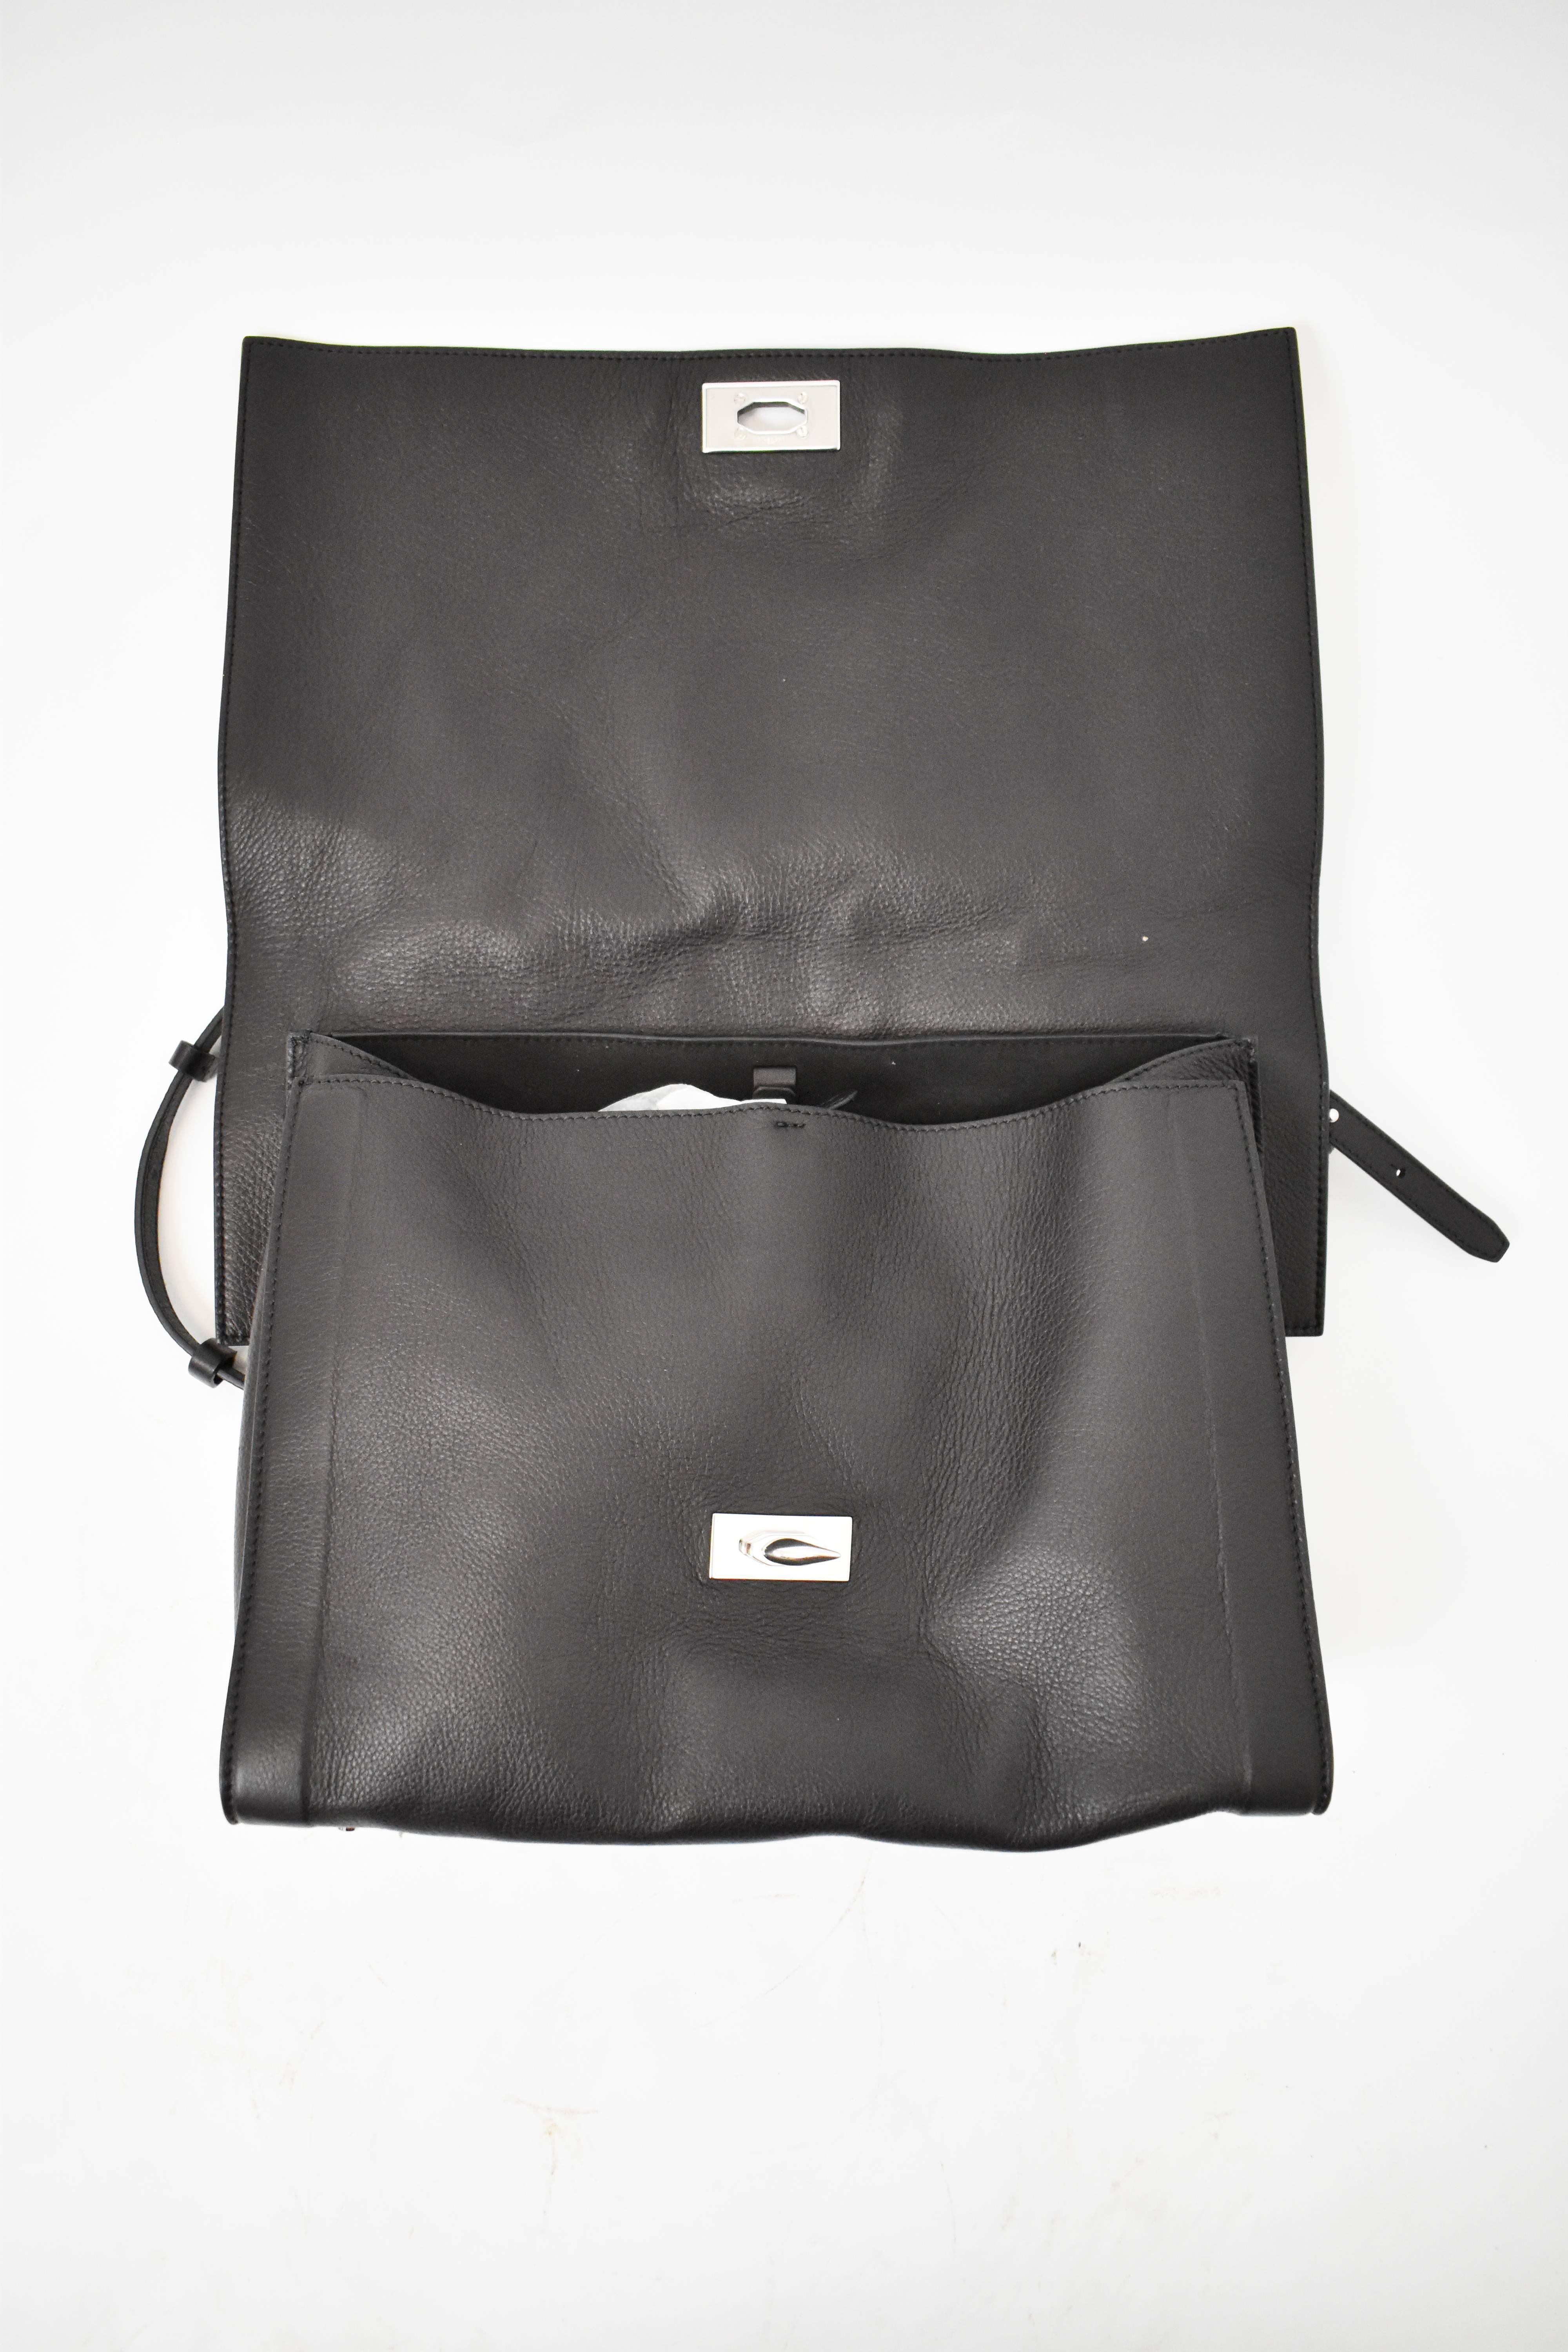 Givenchy Medium Shark Black Textured Leather Tote Bag  1